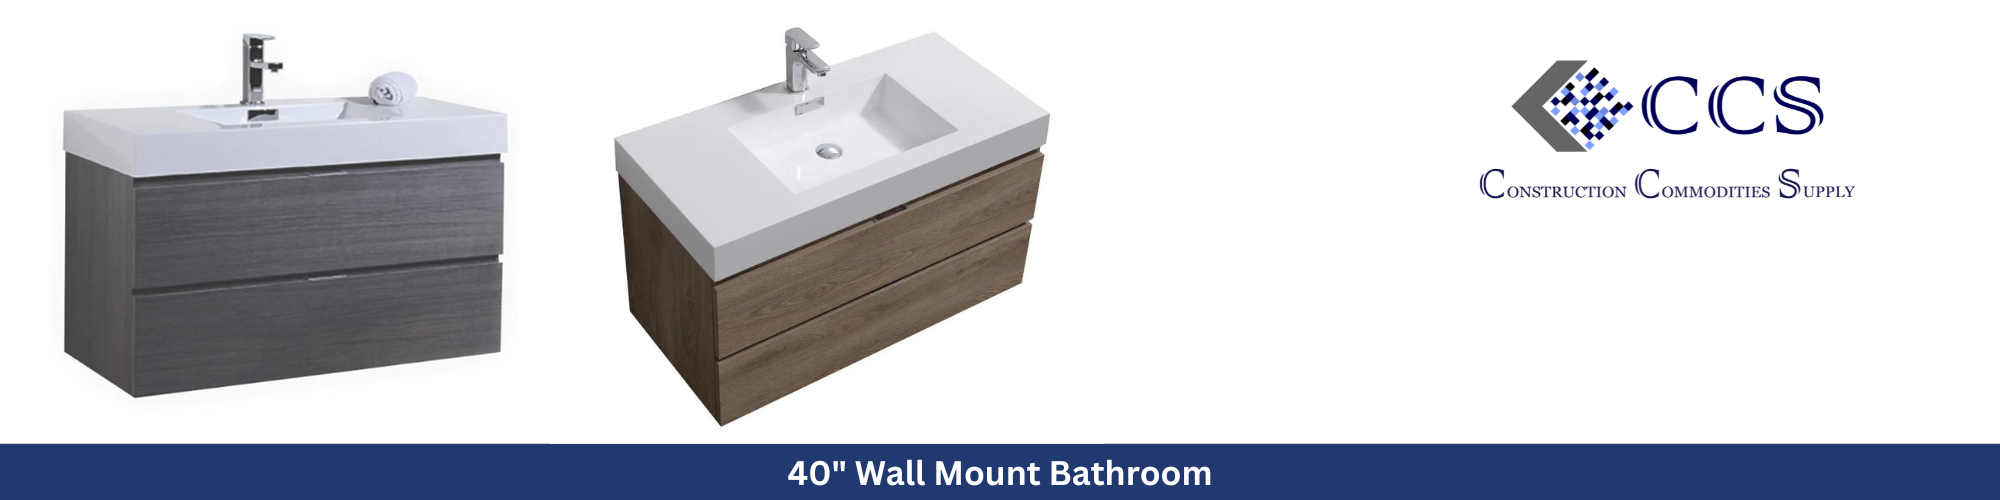 40" Wall Mount Bathroom Vanity